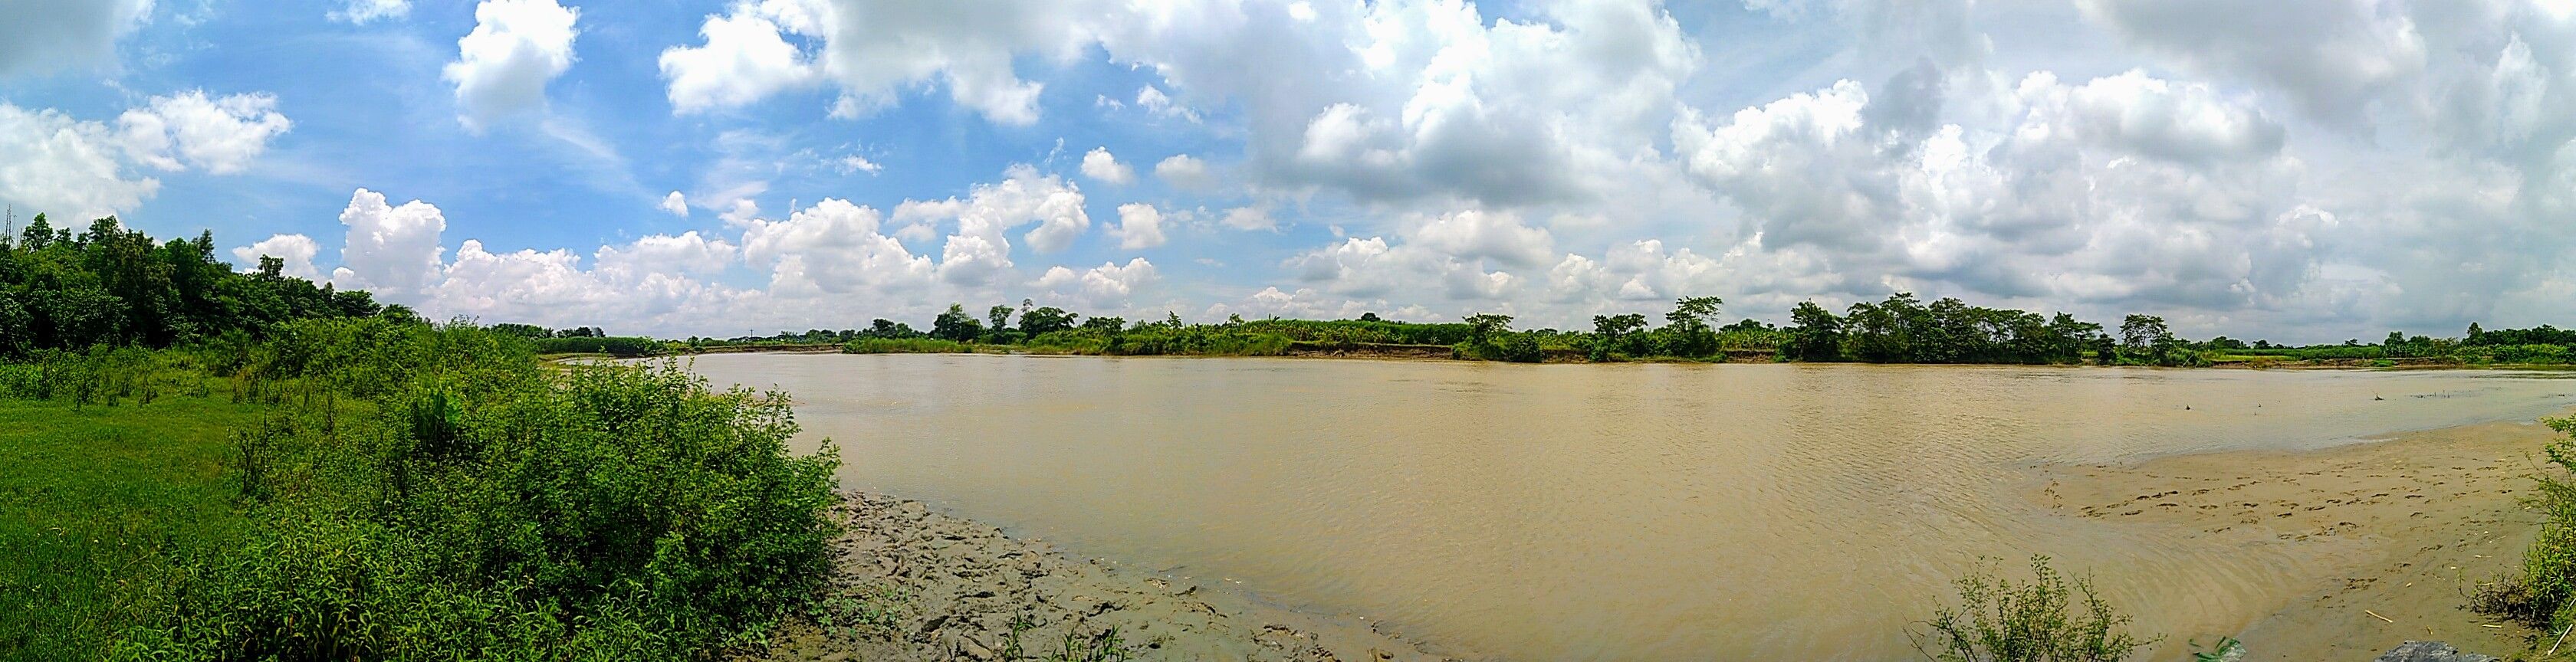 Riverview Panorama -গোমতি নদী